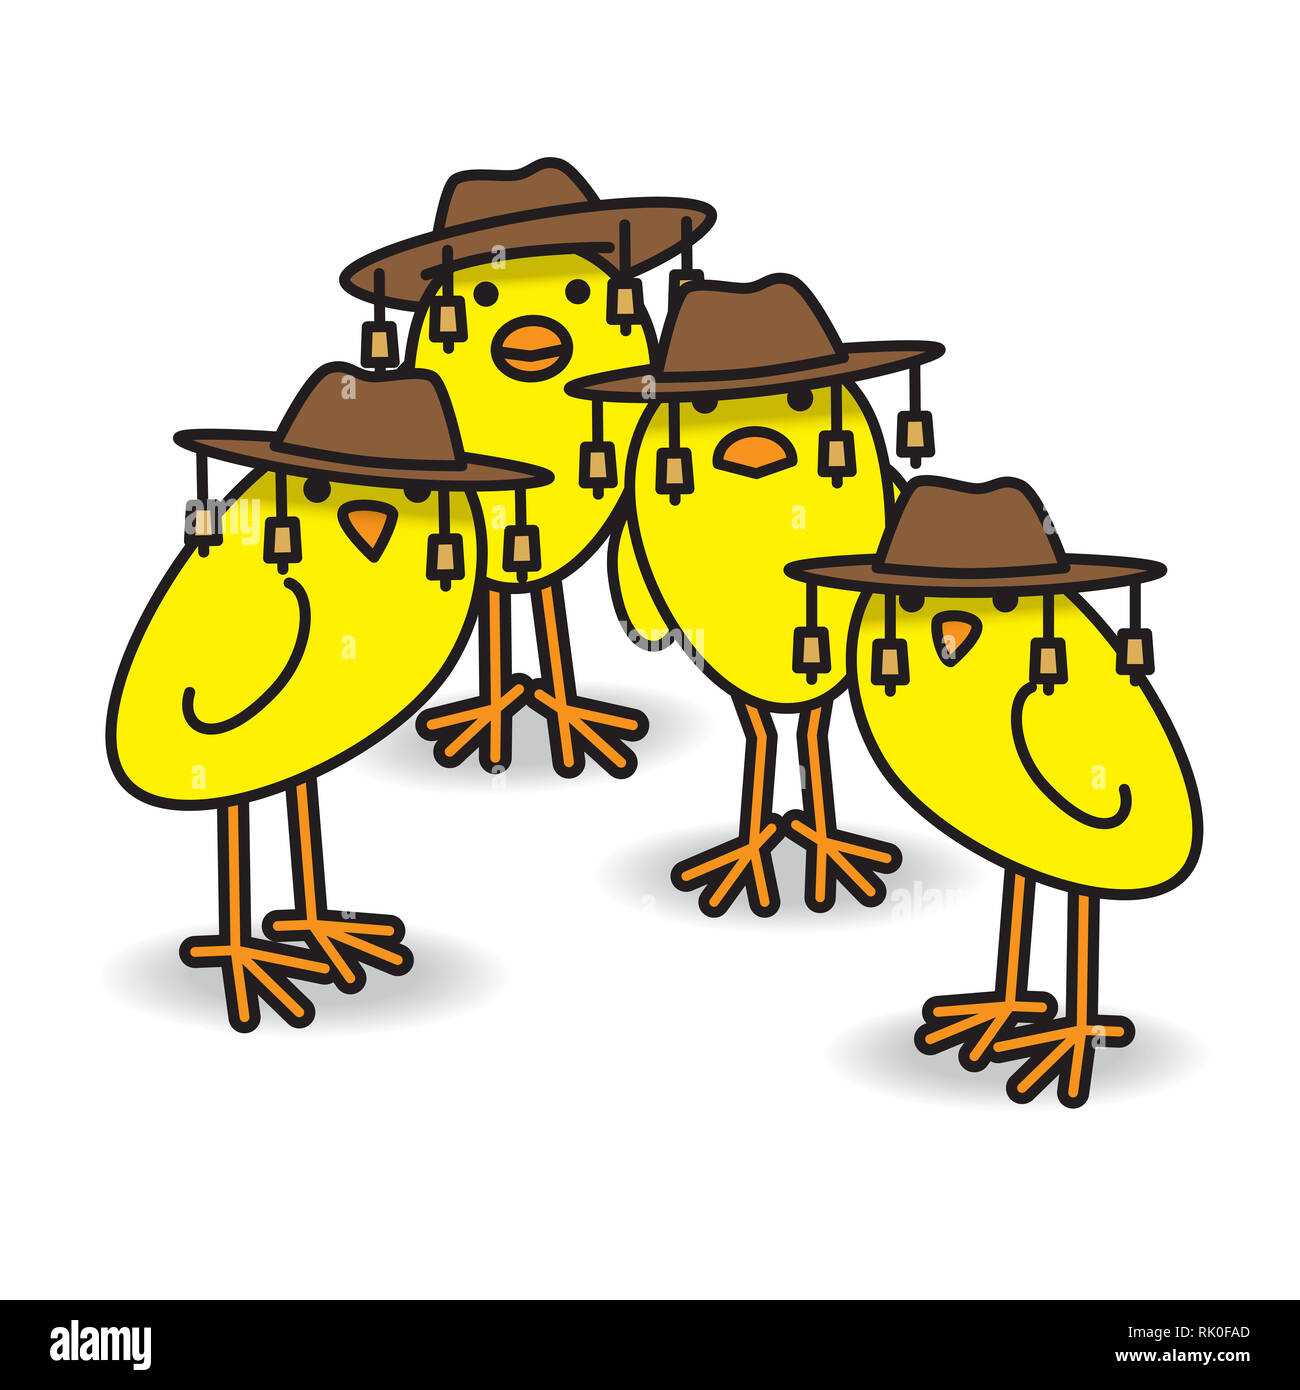 Four Yellow Aussie Chicks Staring towards camera wearing traditional Australian Bush Hats Stock Photo